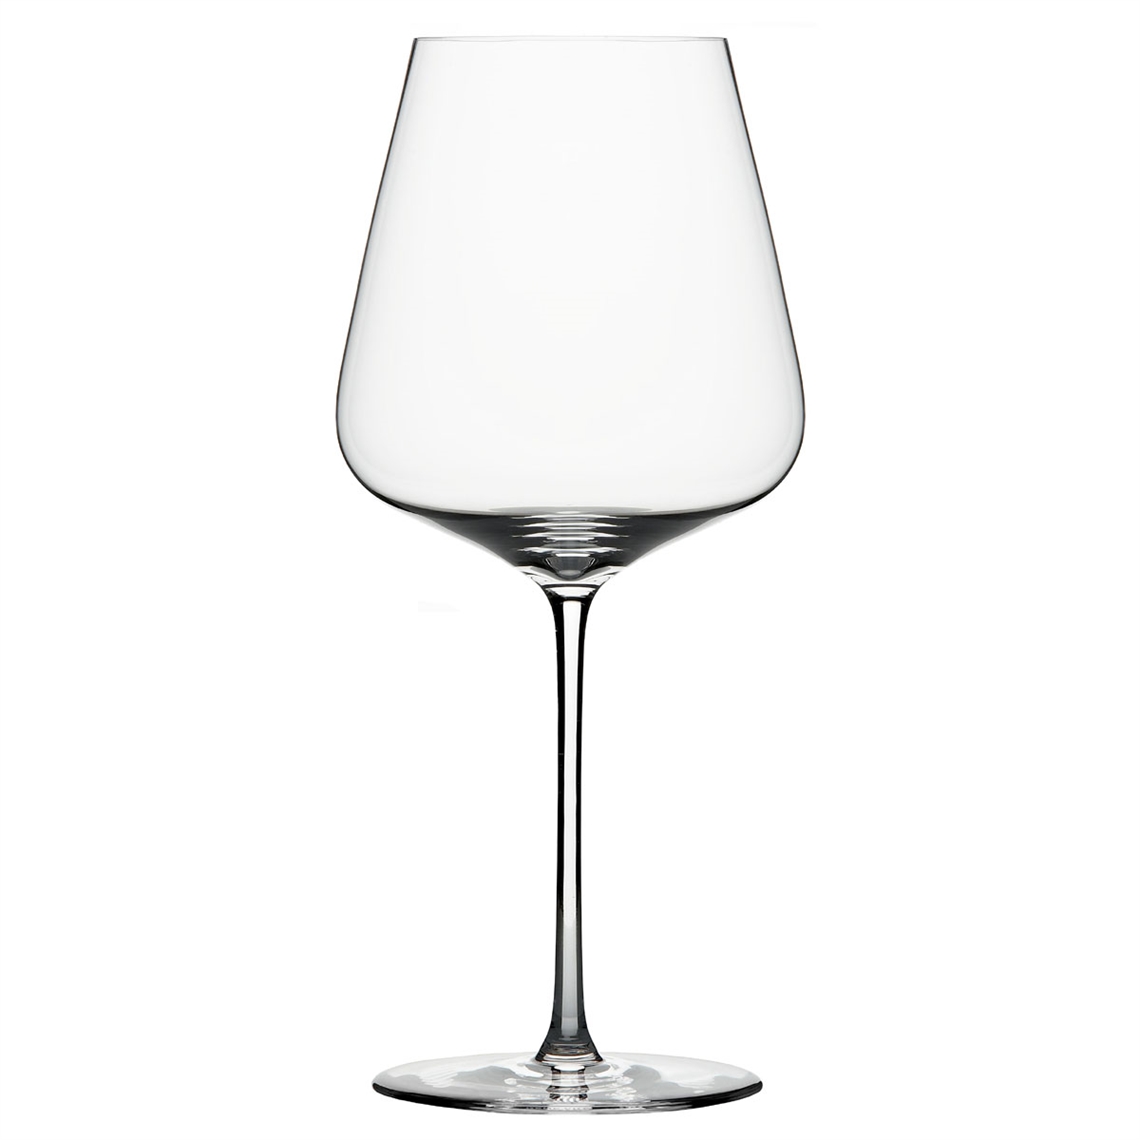 Zalto Restaurant - Denk Art Bordeaux Wine Glass